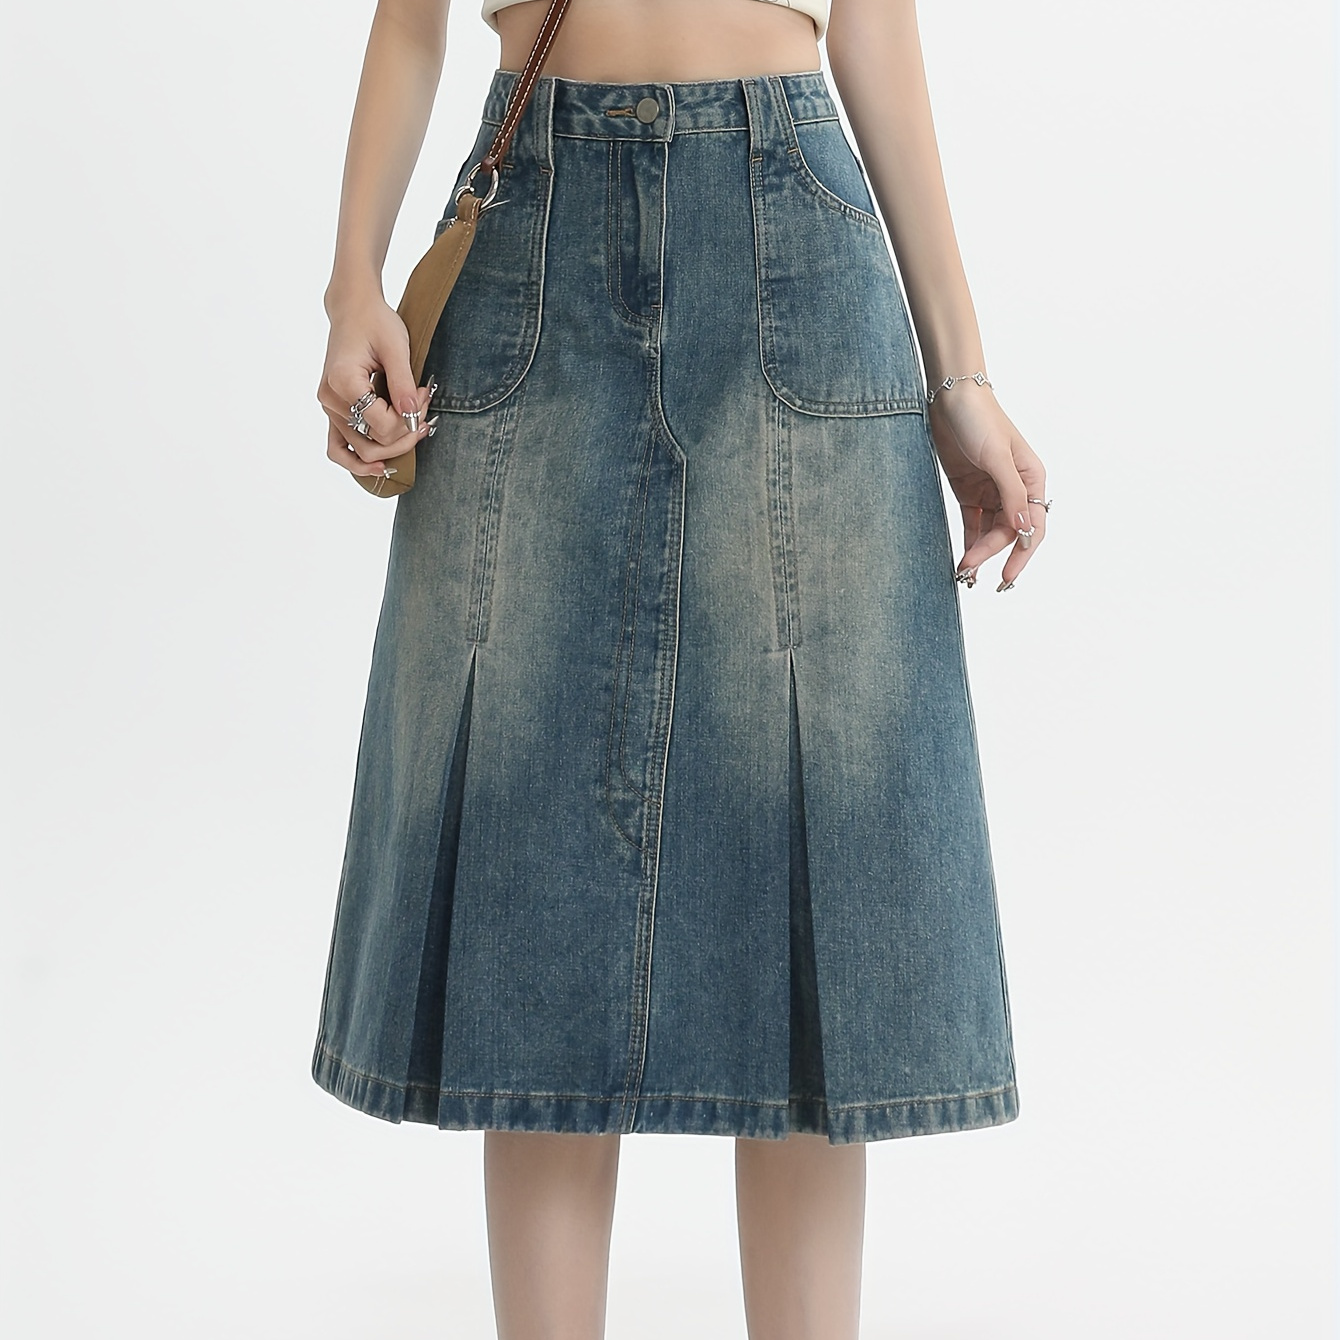 

Women's High-waist Vintage Blue Pleated Midi Denim Skirt, A-line Design With Pockets, Versatile Skirt For Spring, Summer, And Fall